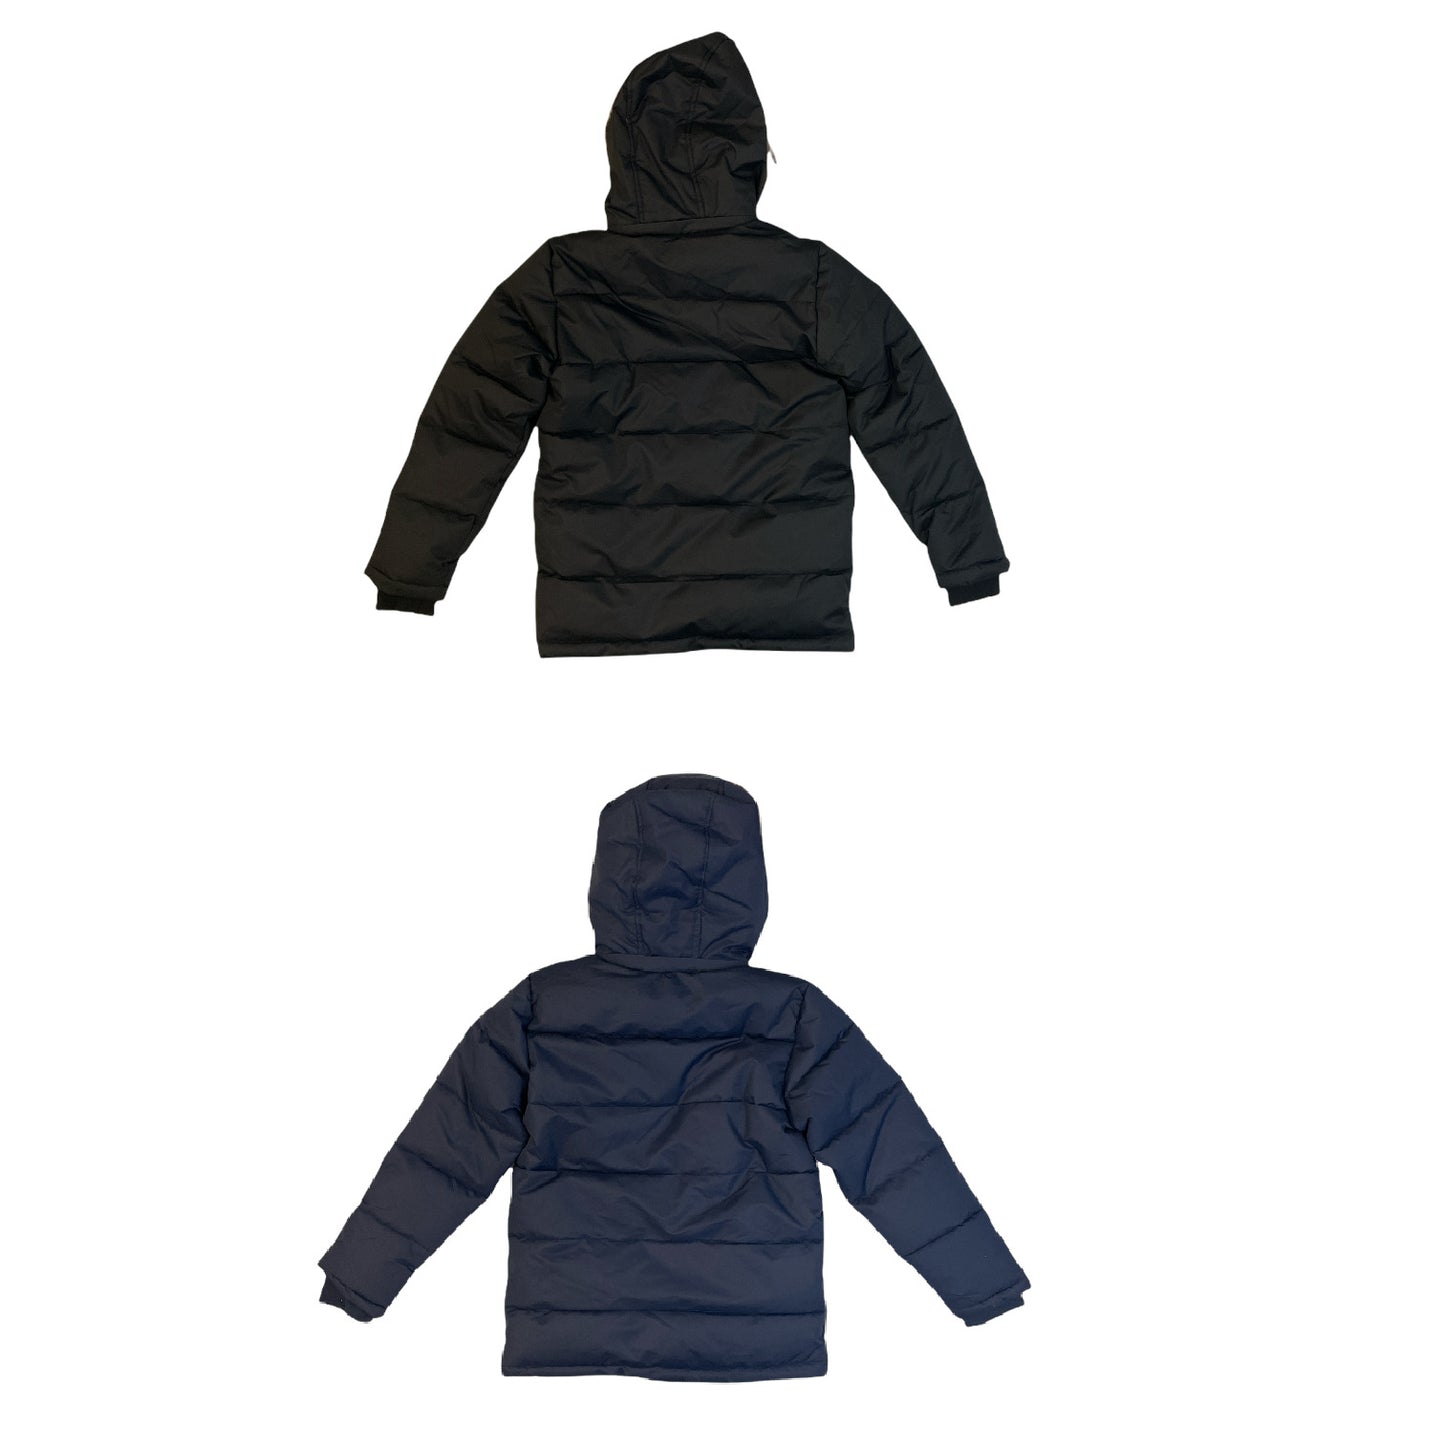 Member's Mark Boy's Durable Wind Resistant Ultimate Parka Jacket, Removable Hood